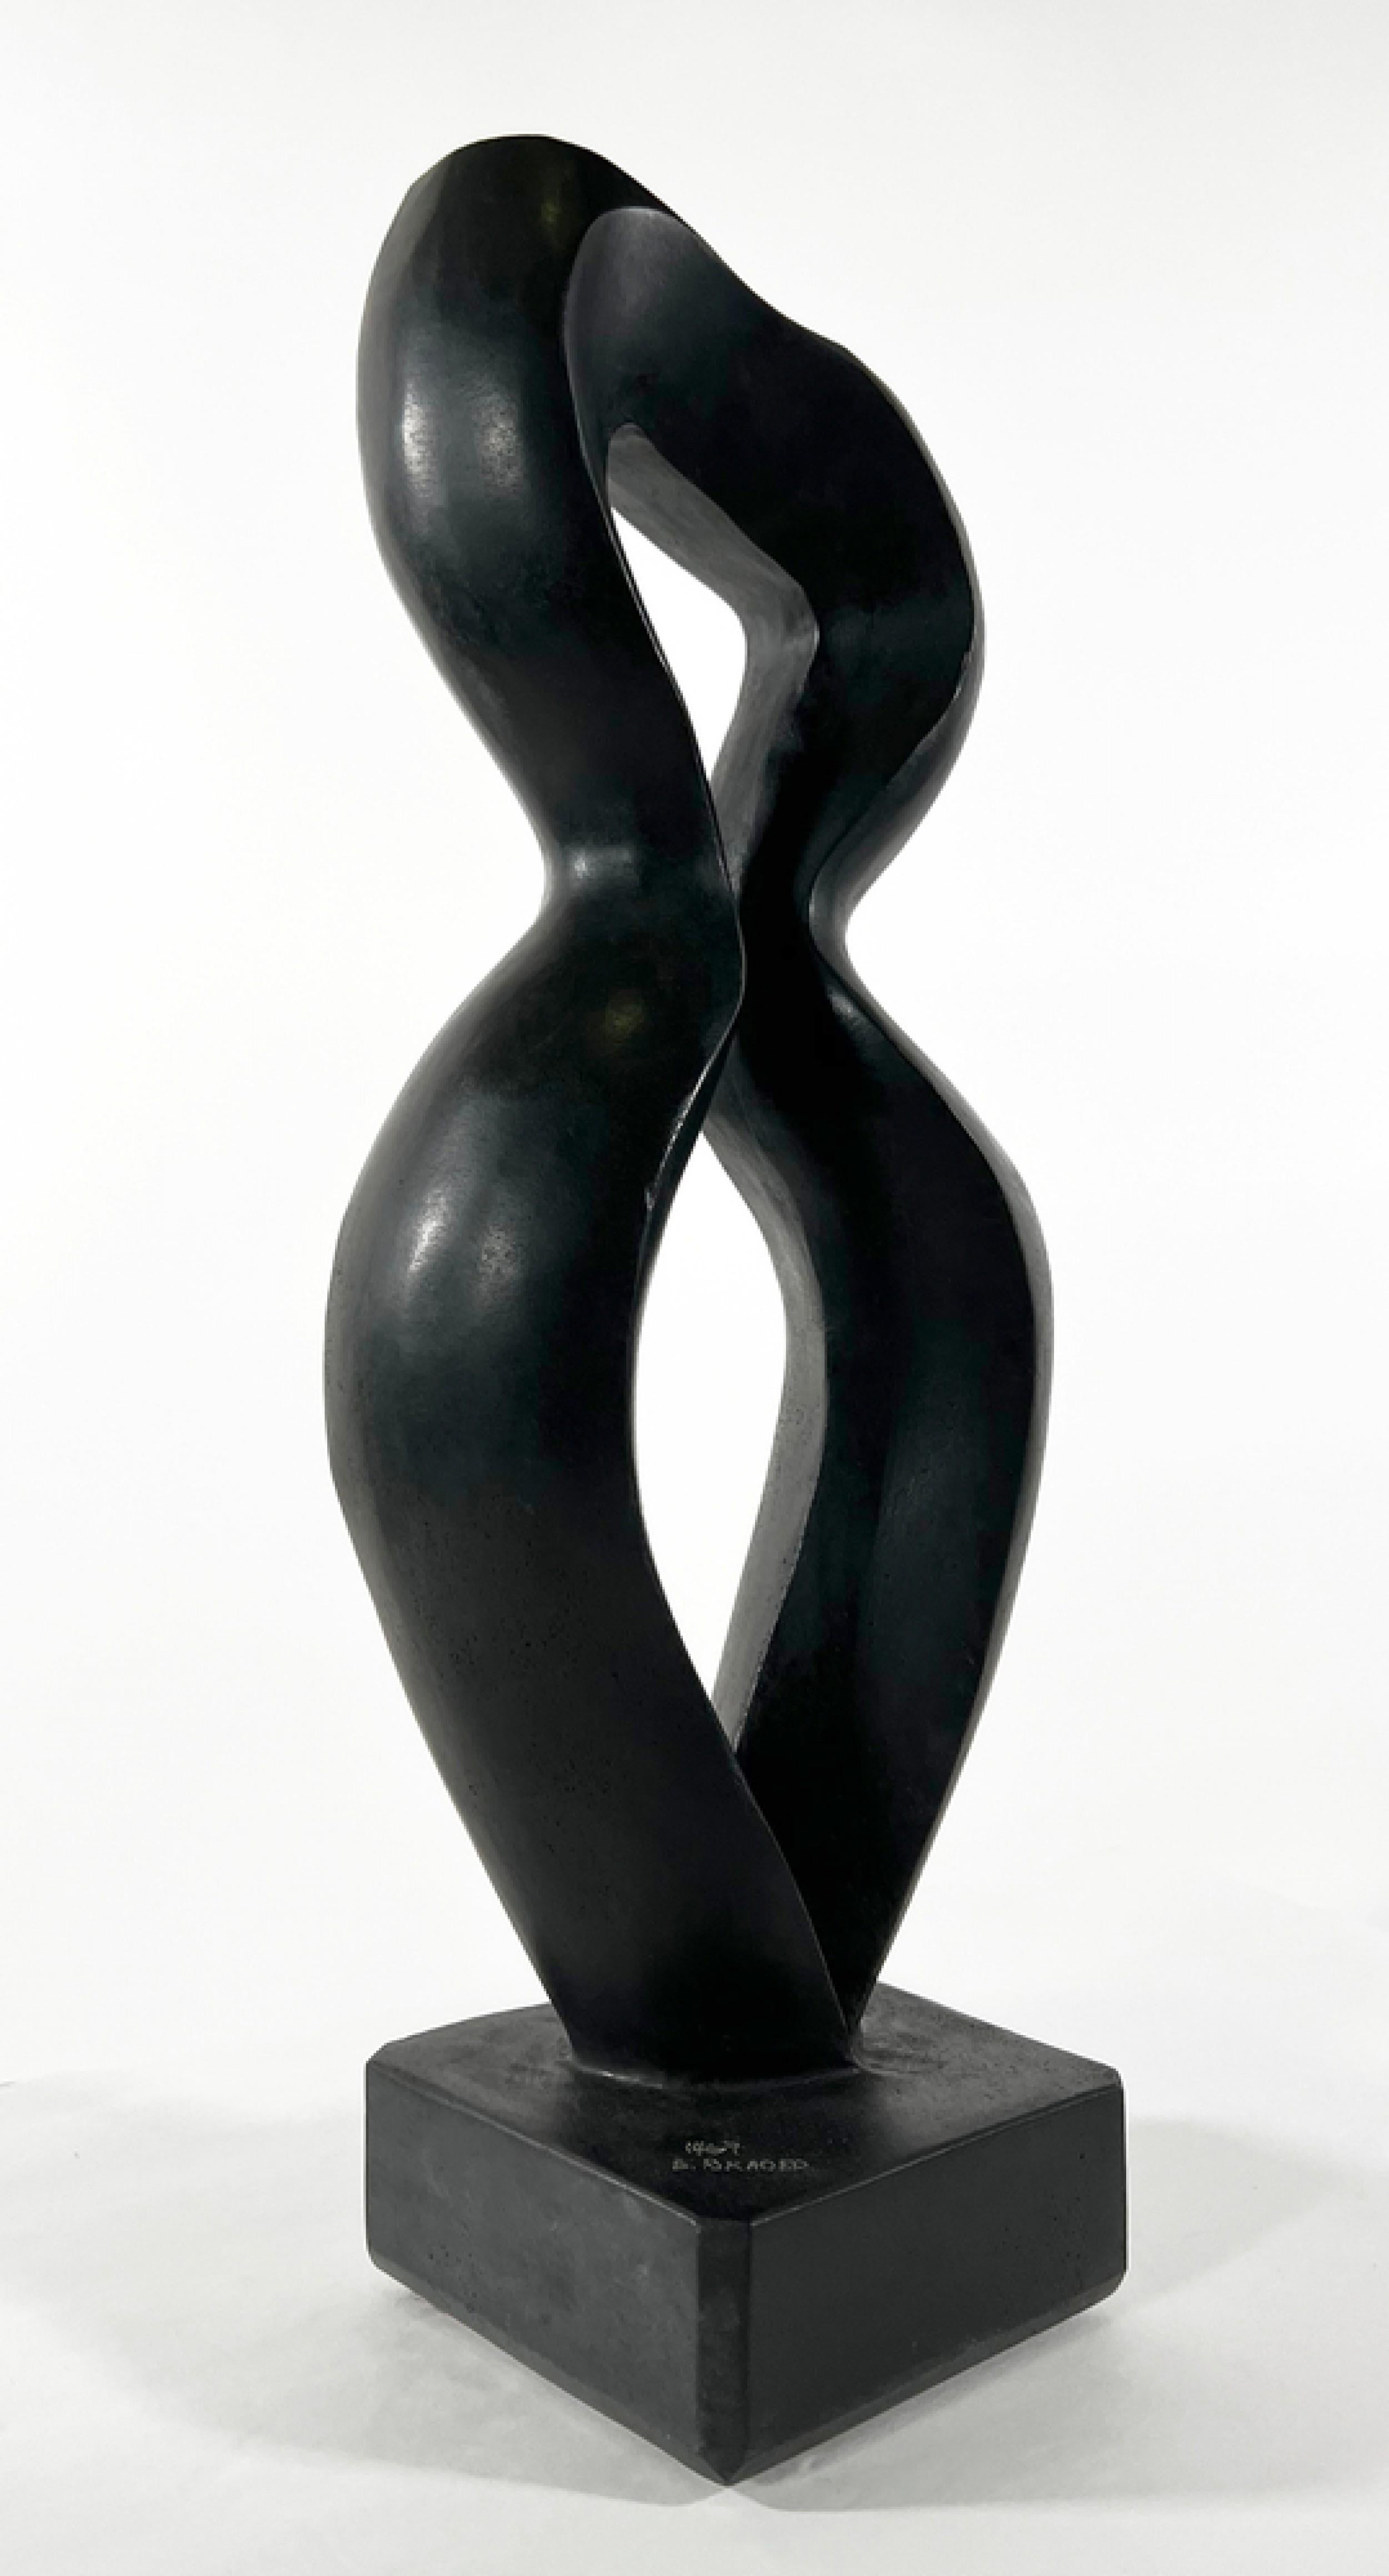 Contemporary Swiss abstract black basalt sculpture, titled 